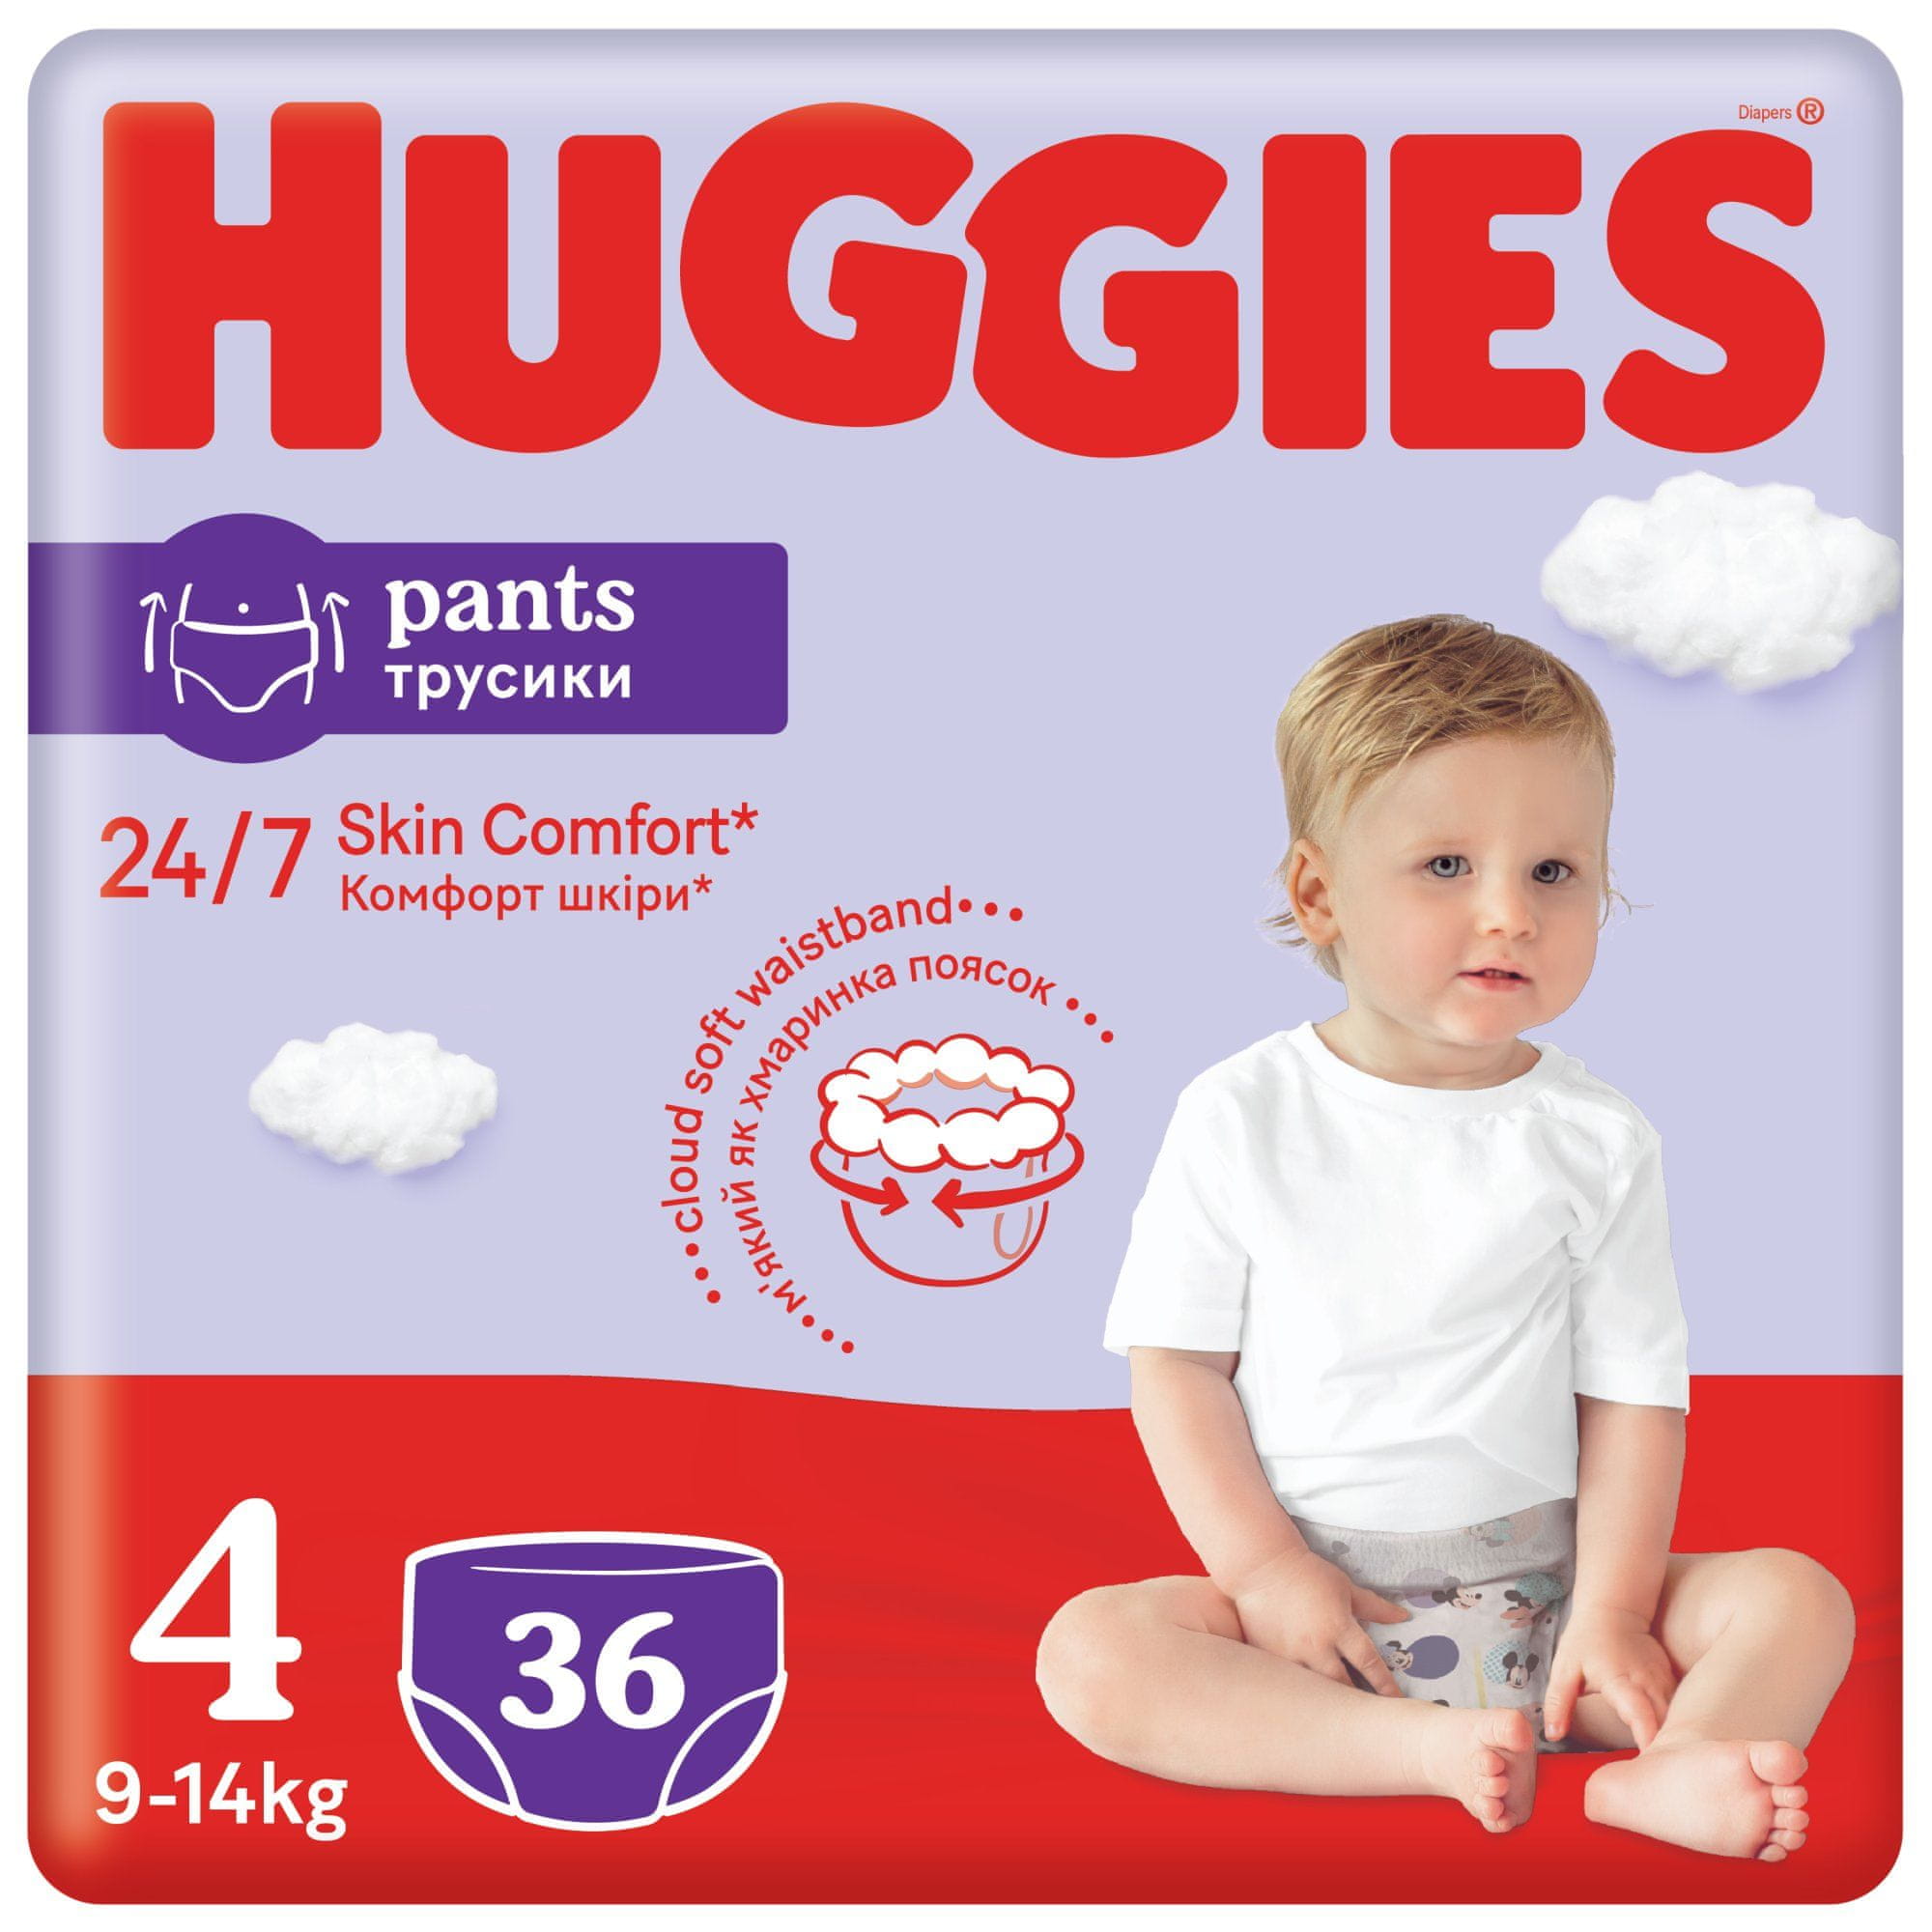 huggies pants 4 36